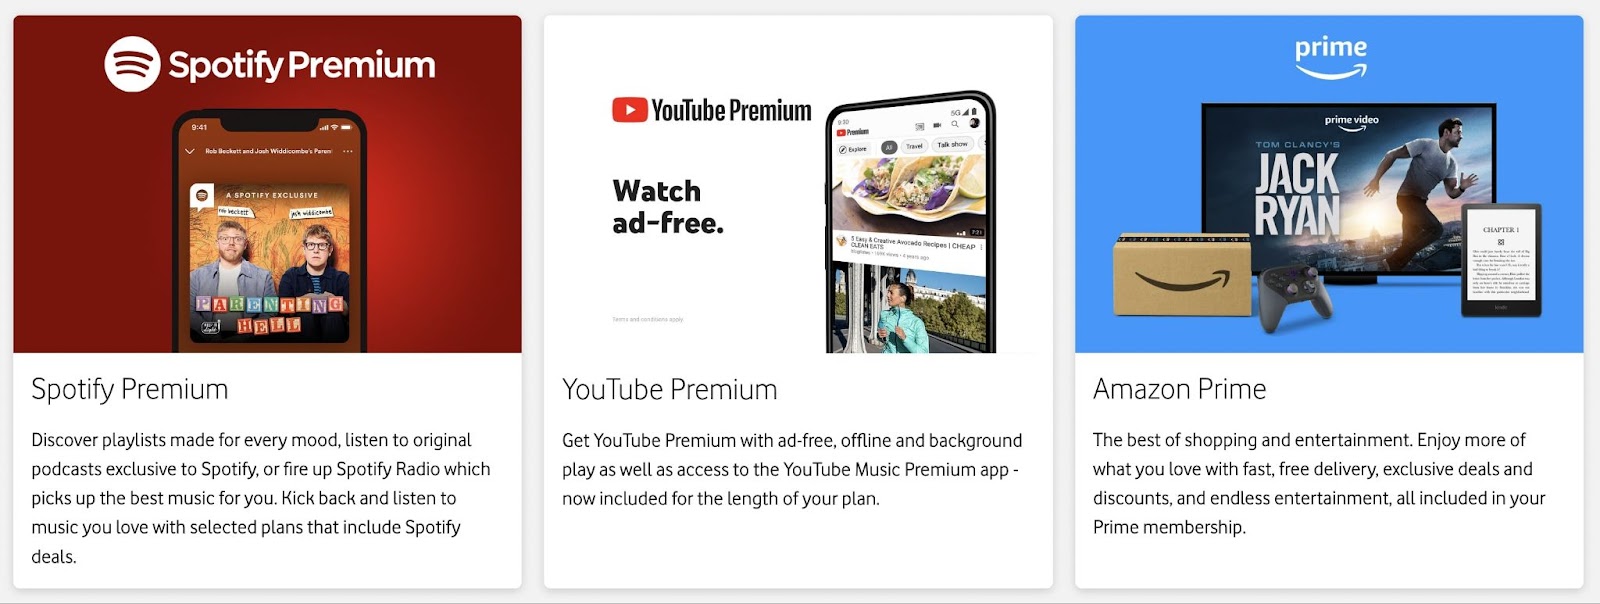 Vodafone rewards section including Spotify Premium, YouTube Premium, and Amazon Prime